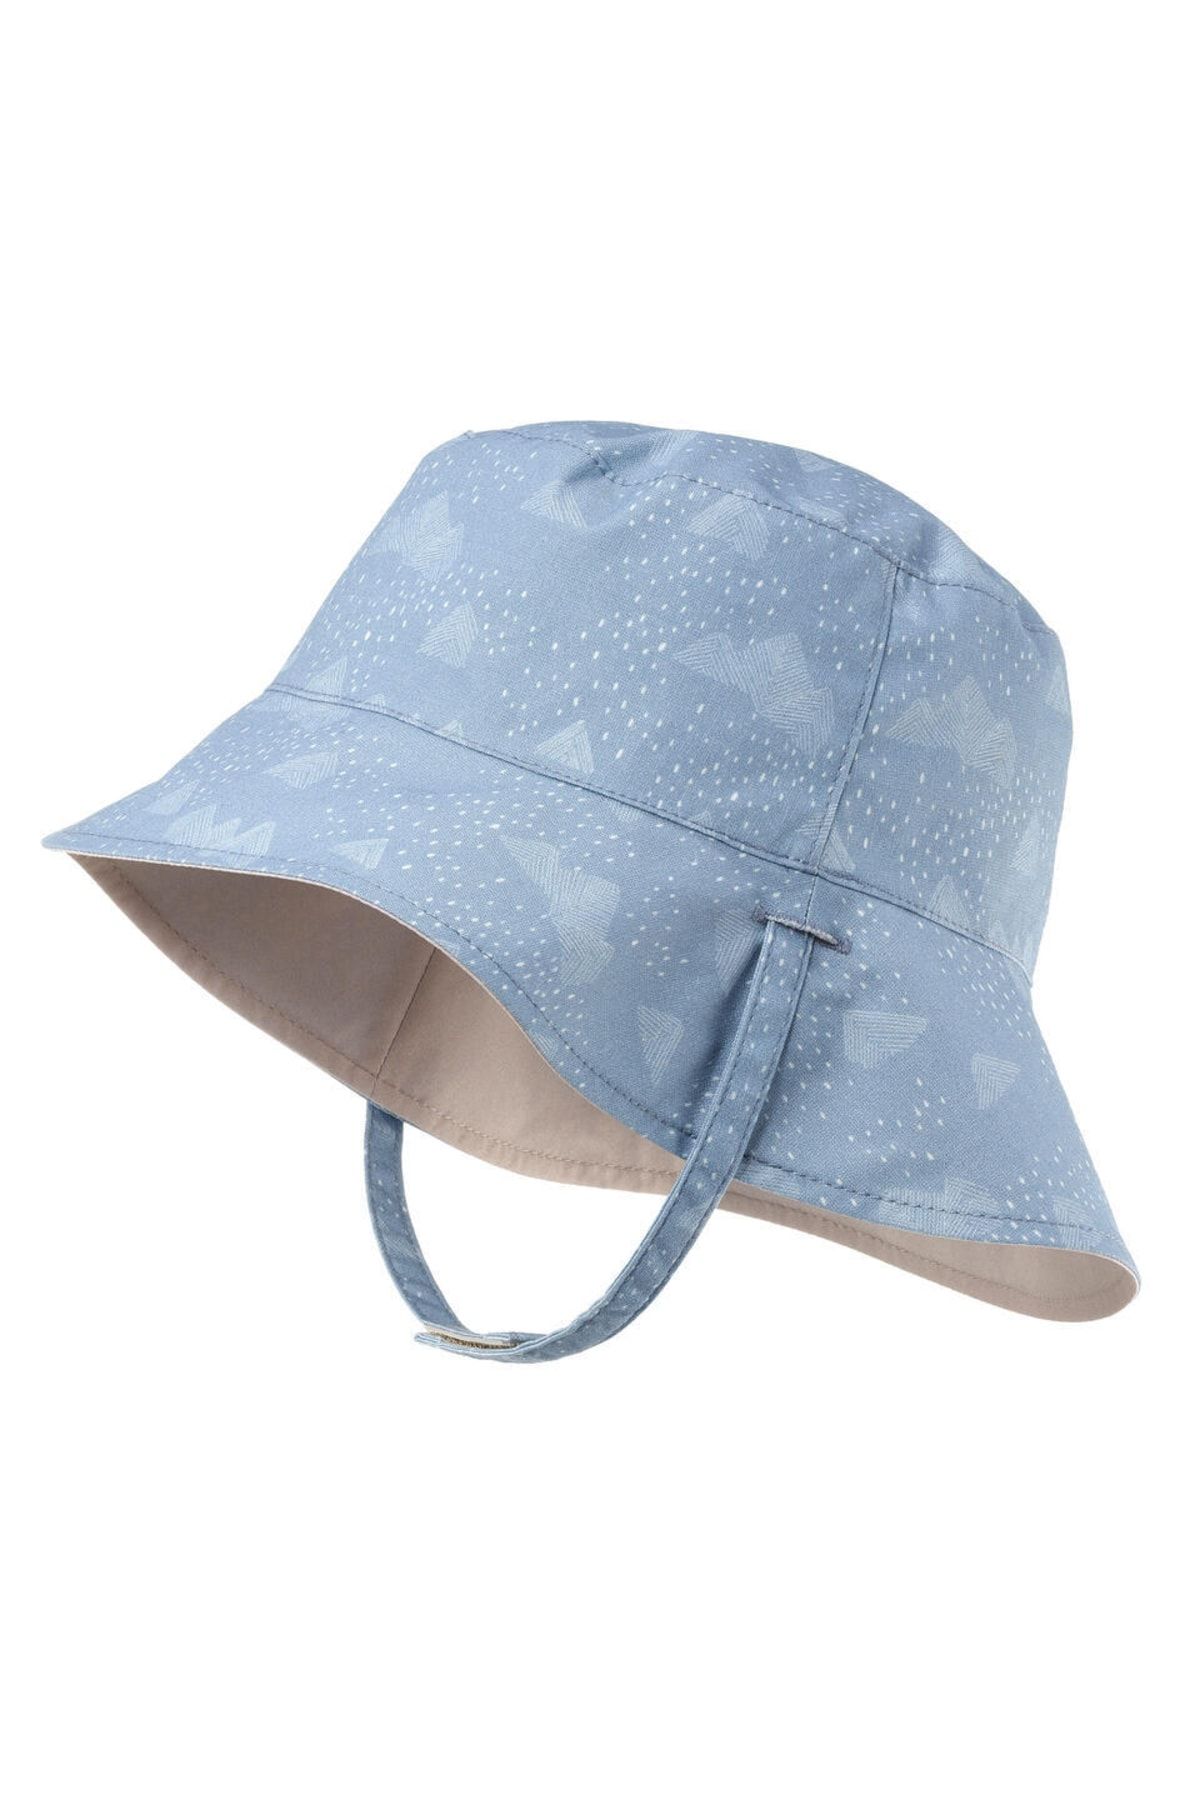 Decathlon - Çocuk Uv Korumalı Şapka Uv Korumalı Şapka Çift Taraflı Mh100